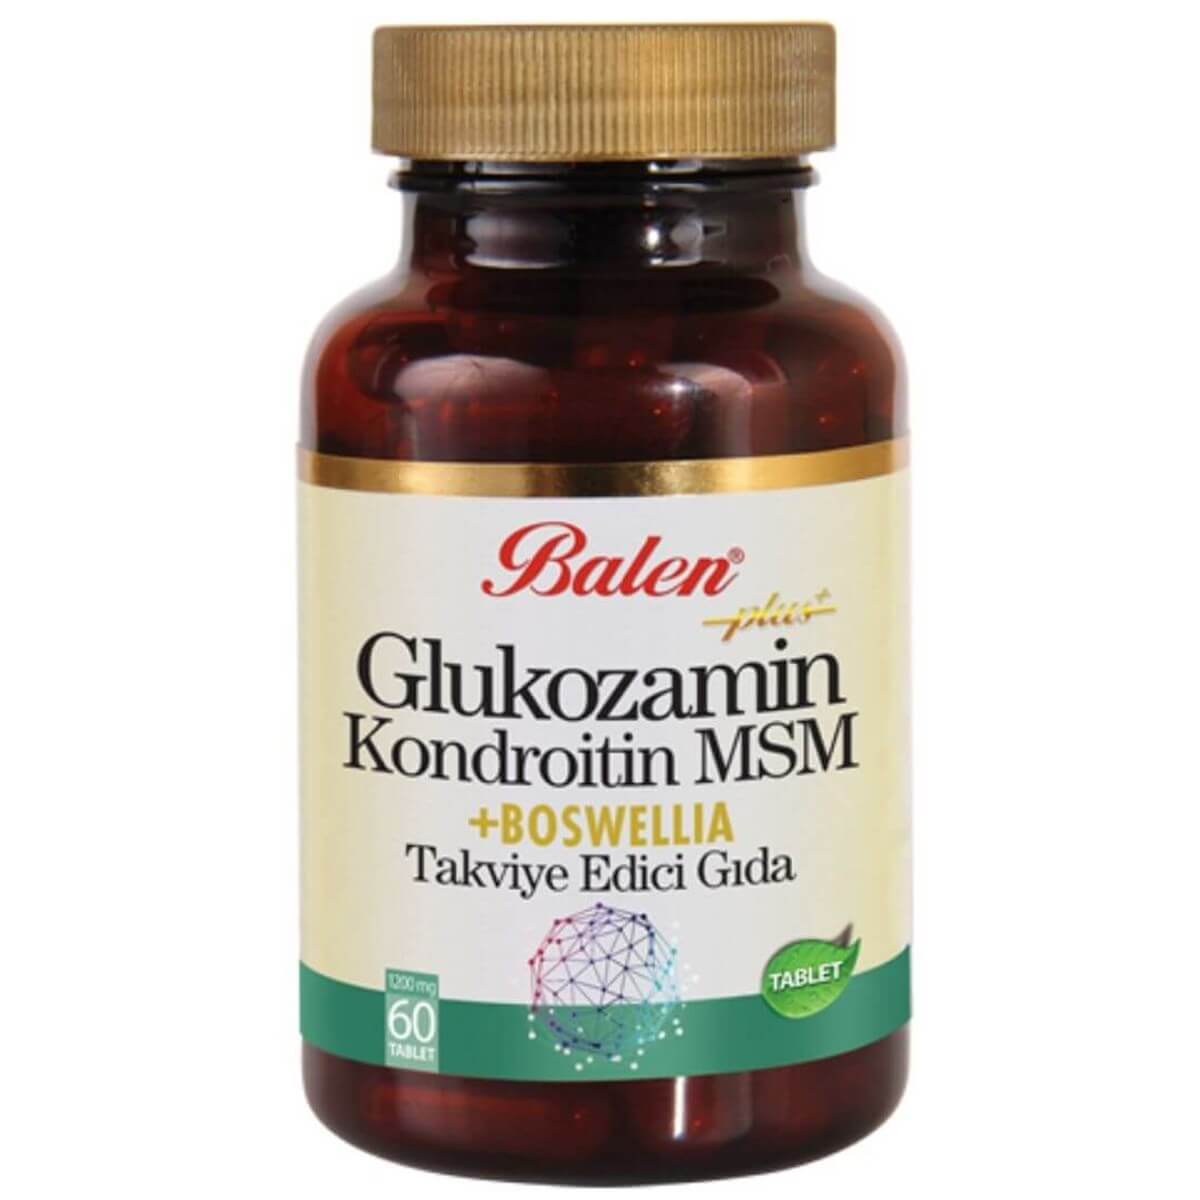 Balen Glukozamin Kondroitin MSM Boswellia Tablet 60x1200mg